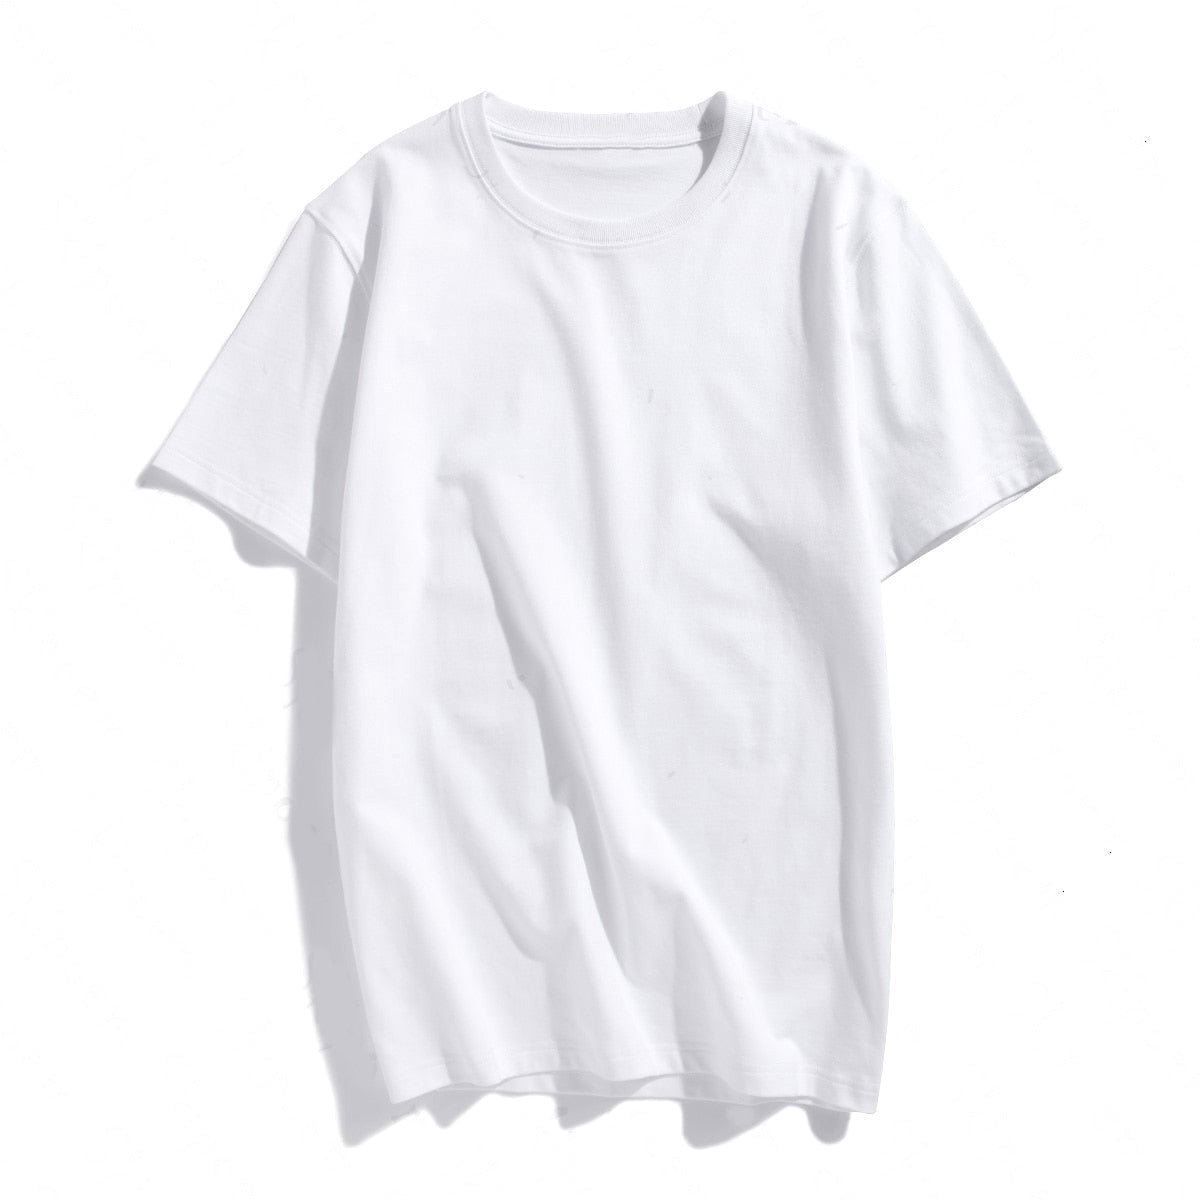 white1 / XS Men's Shirt Stray Cat Game 14:4602#white1;5:100014066